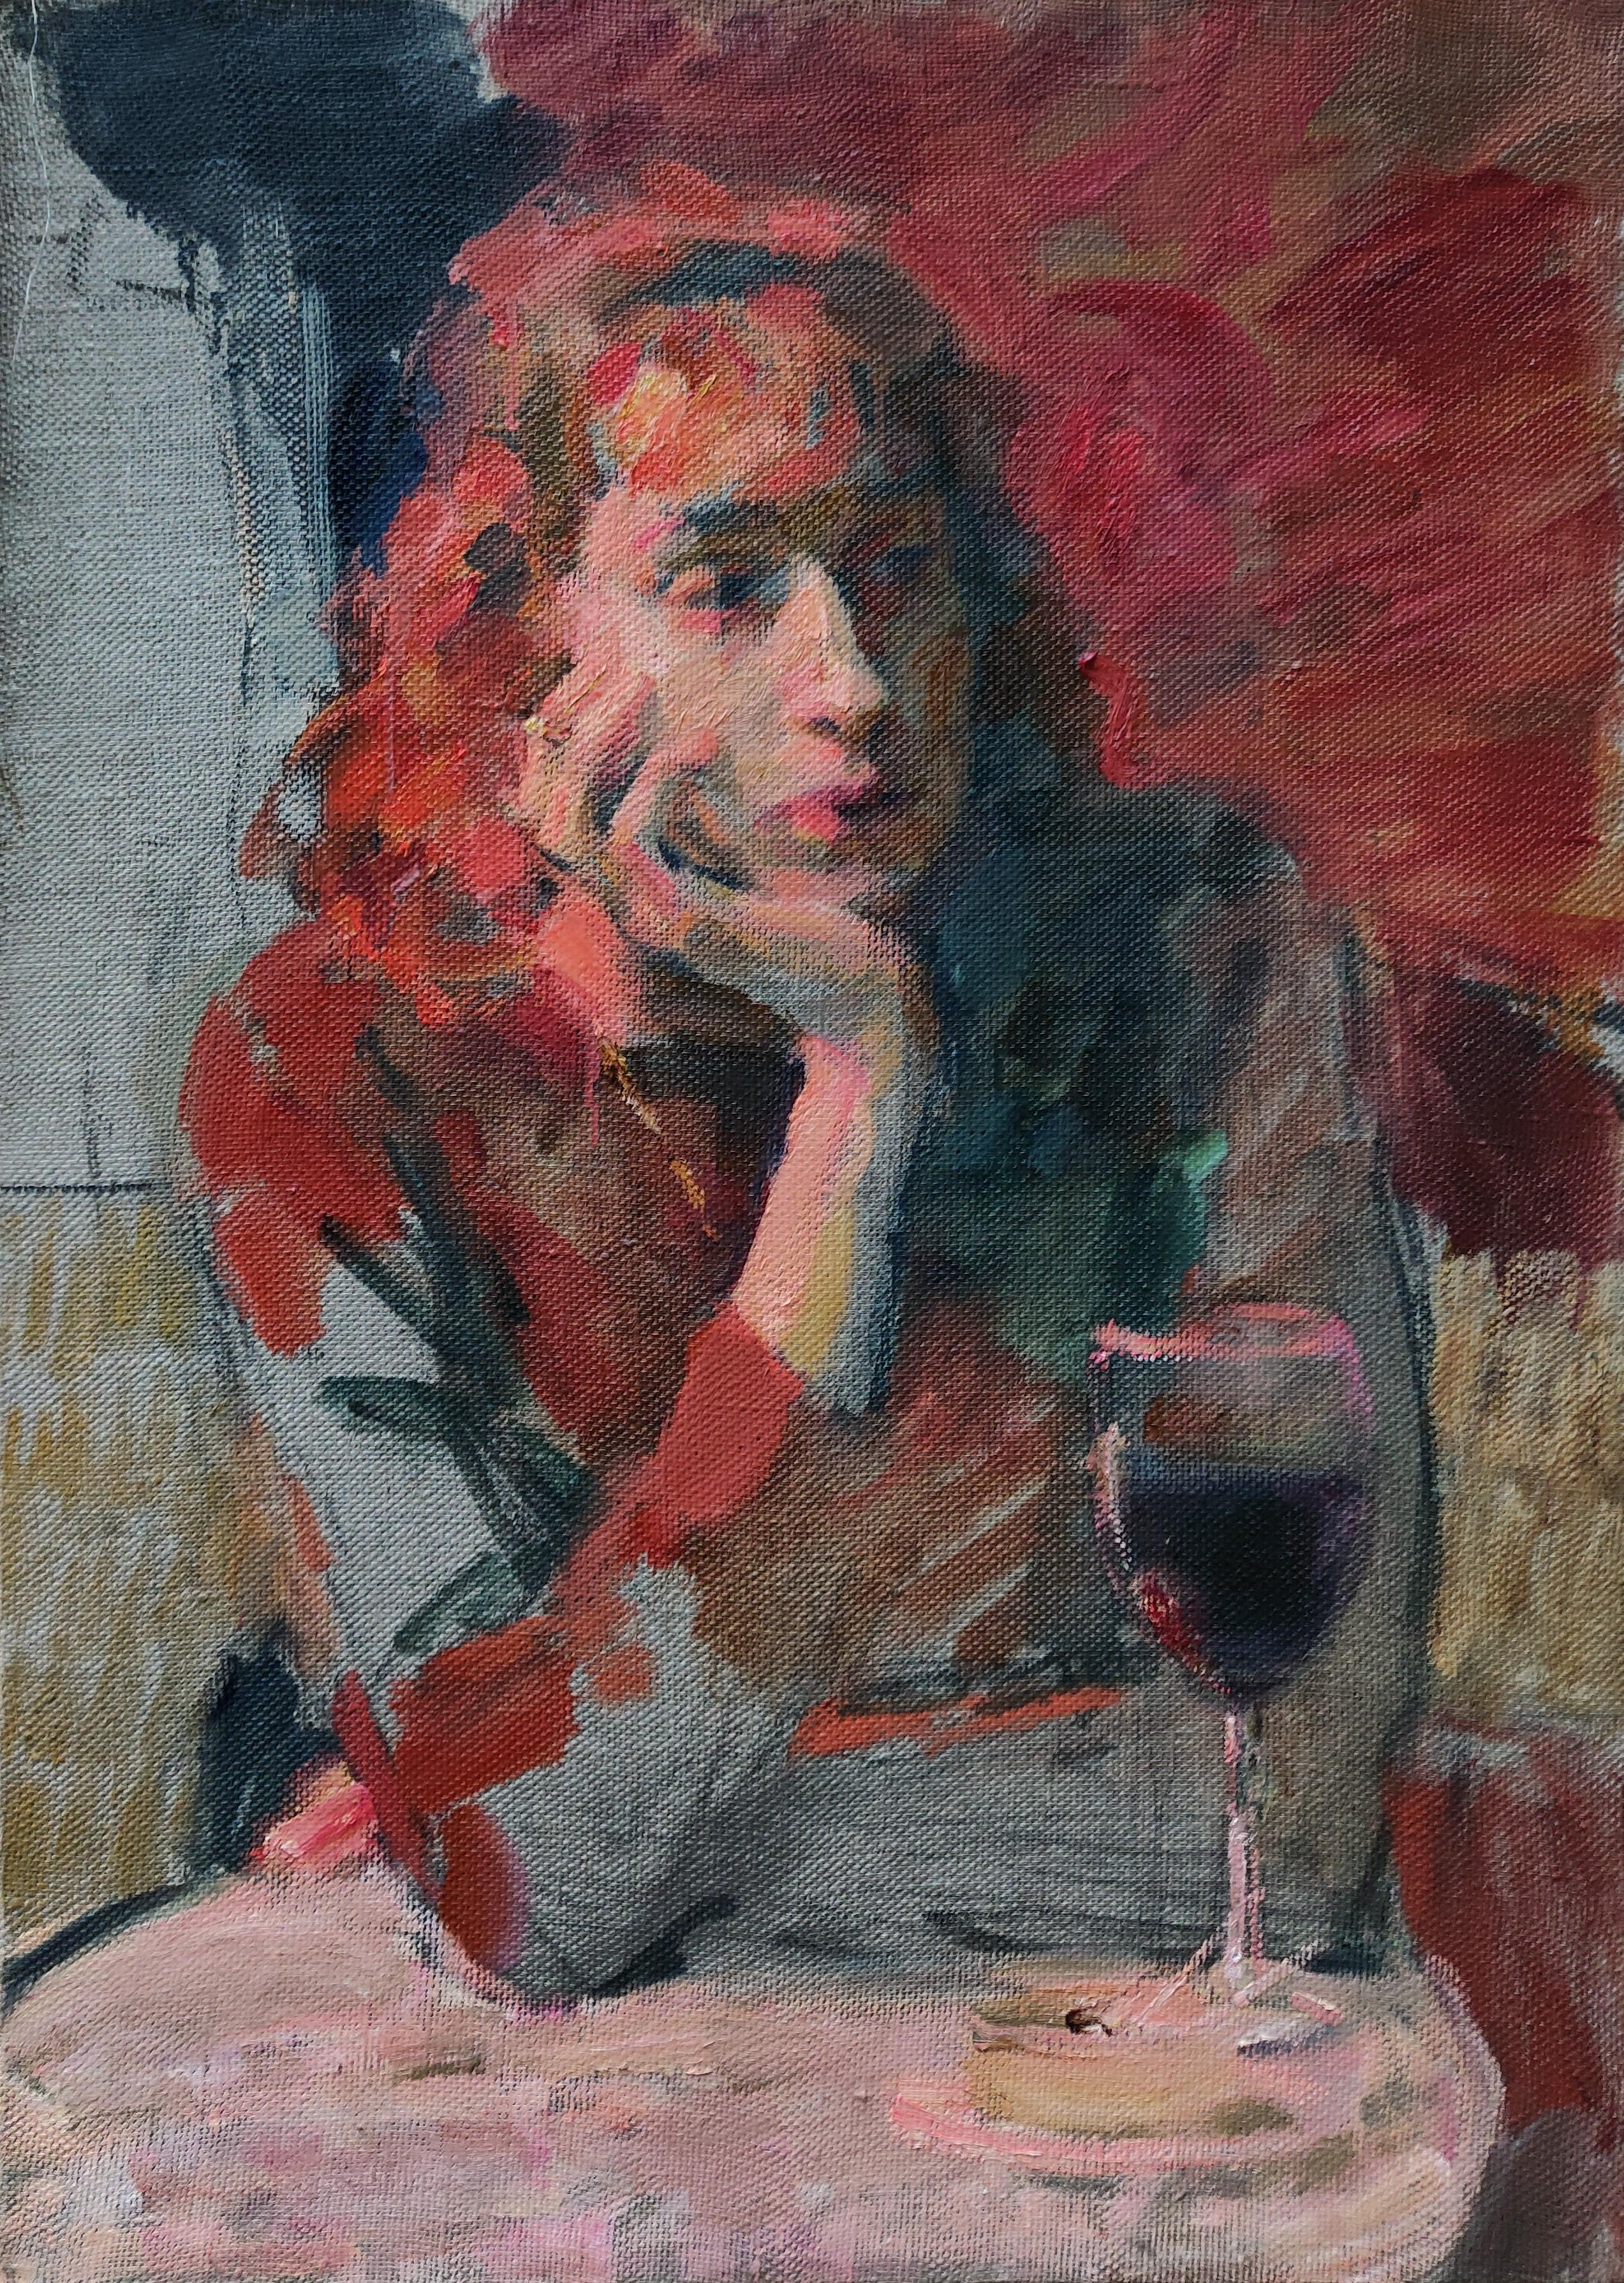 Samir Rakhmanov Figurative Painting - Female With a Glass of Wine - 21st Century Contemporary Paris Cafe Oil Painting